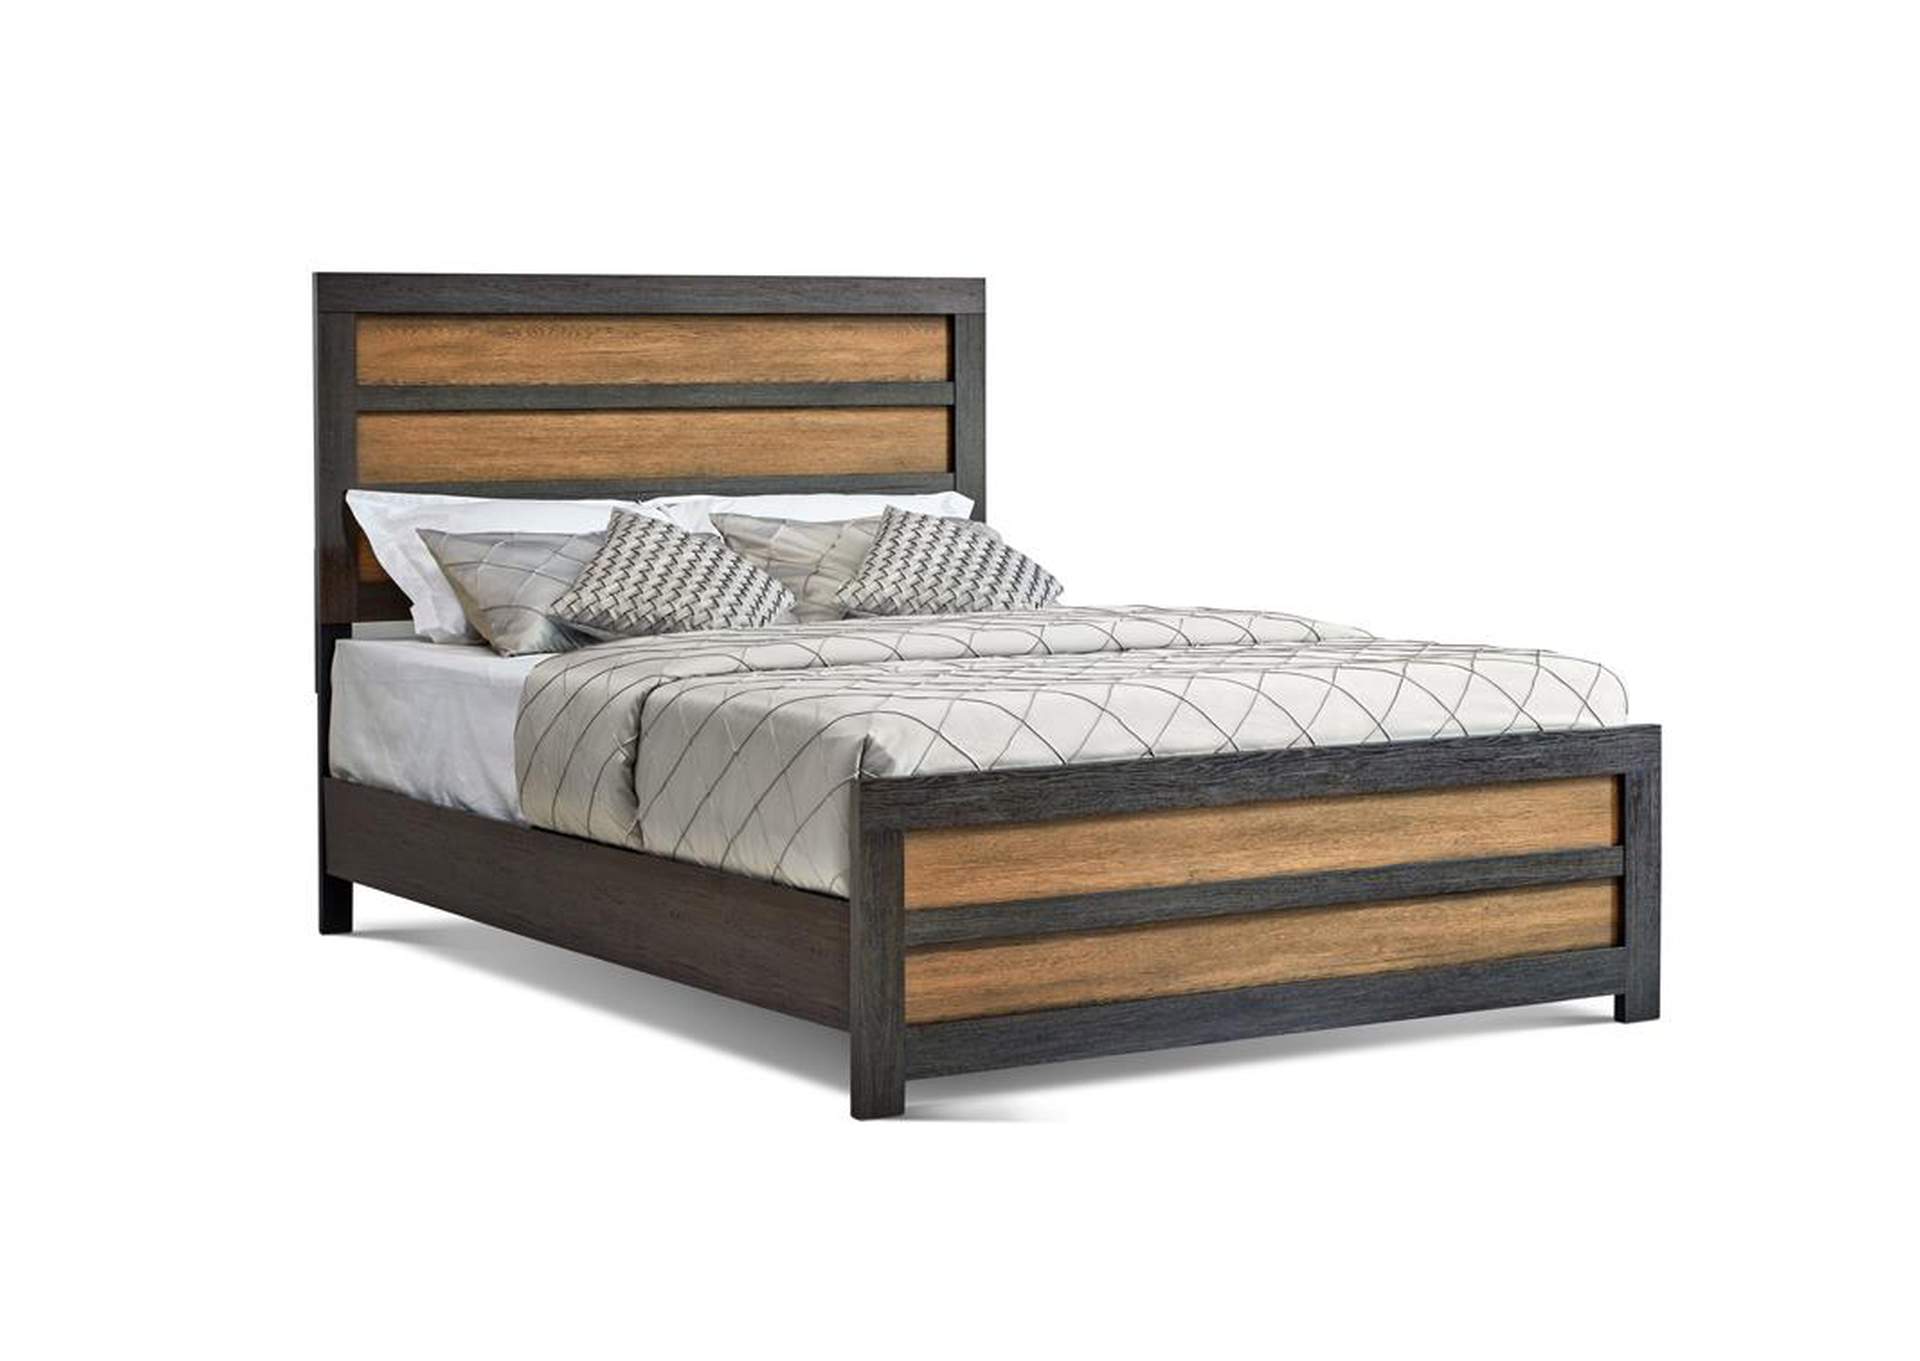 Eastern King Bed Oak Furniture Liquidators, Eastern King Bed